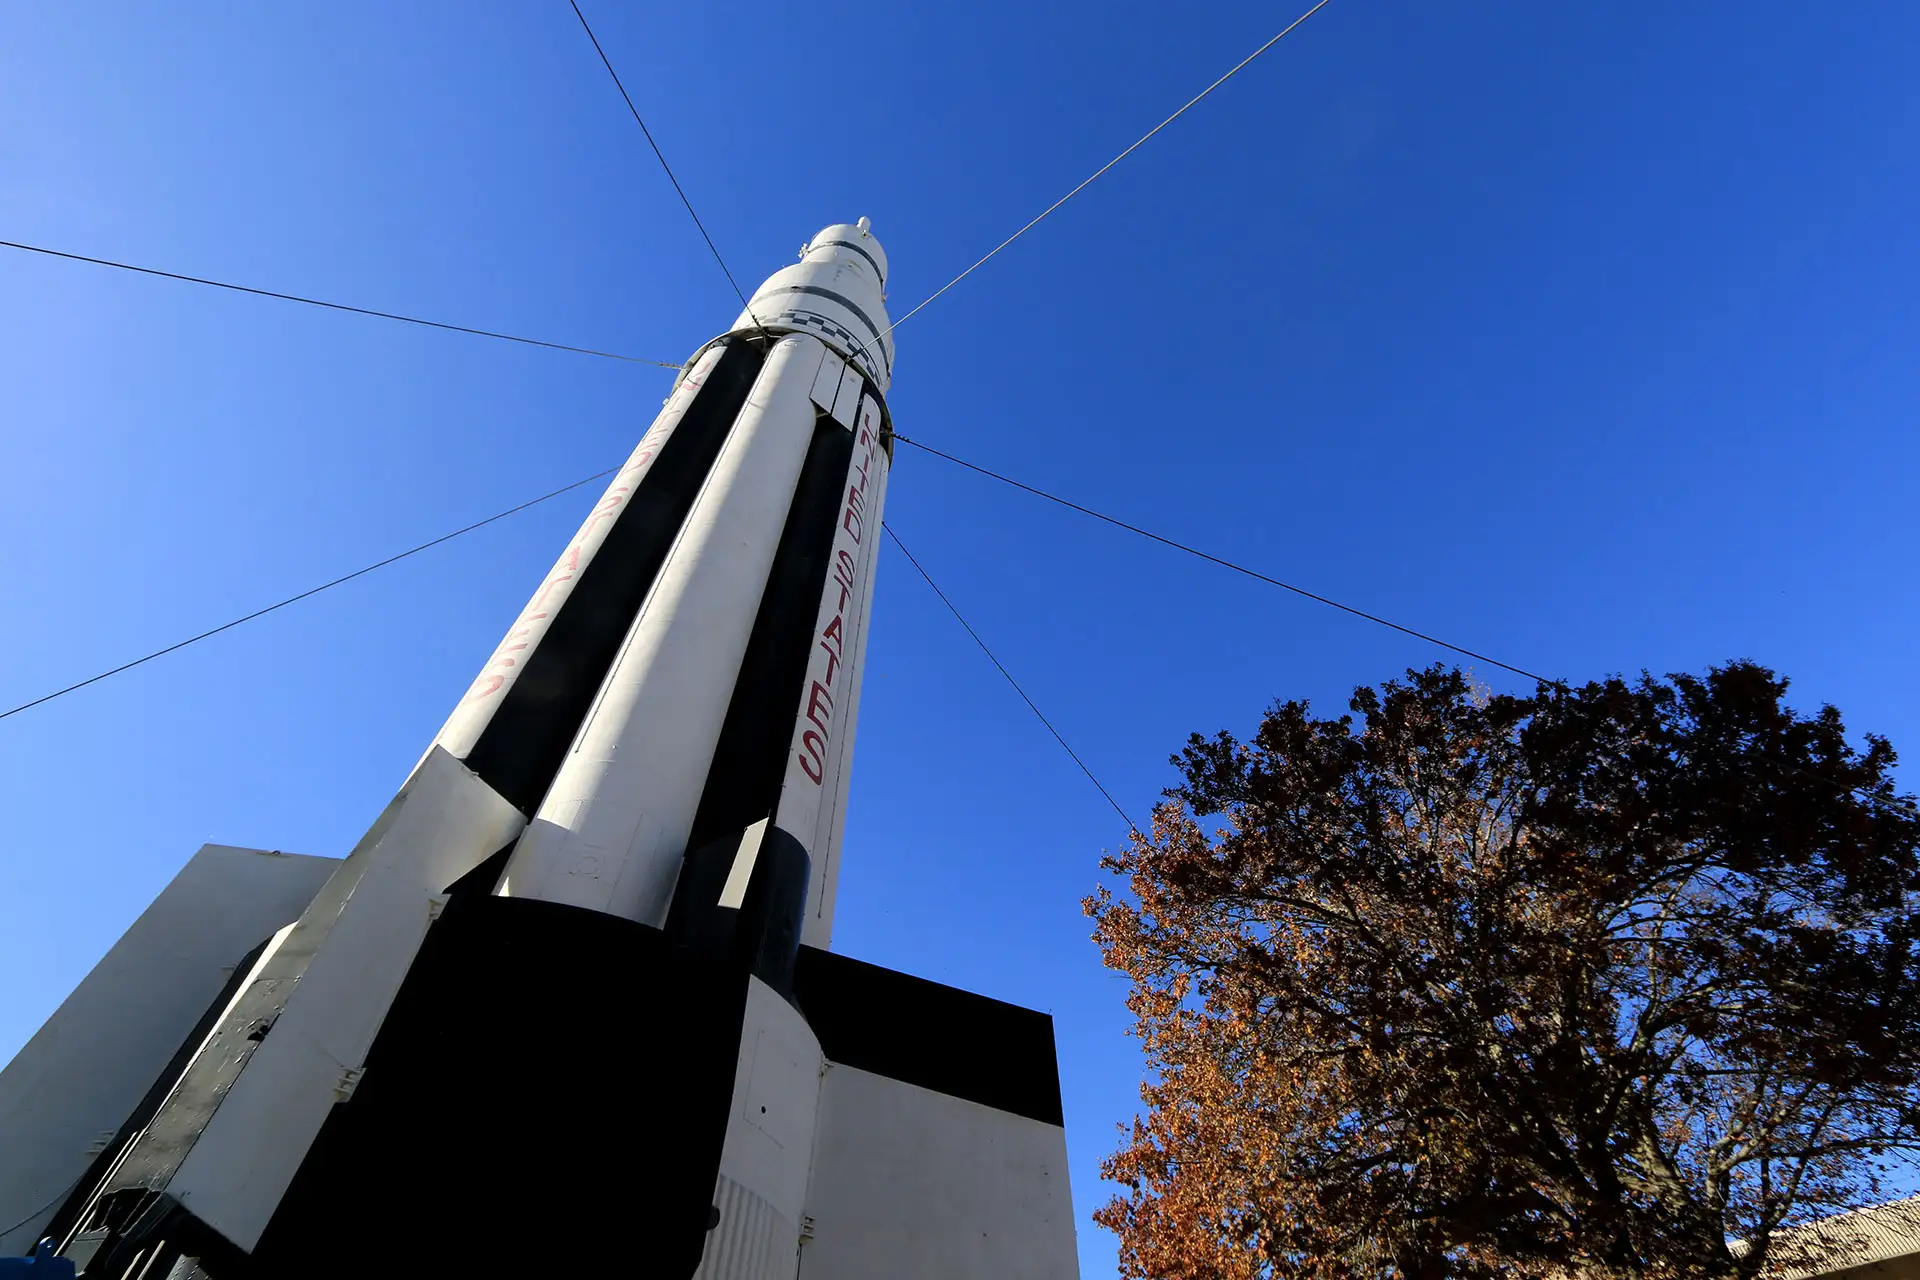 U.S. Space and Rocket Center in Huntsville, AL; Courtesy of schusterbauer.com/Shutterstock.com